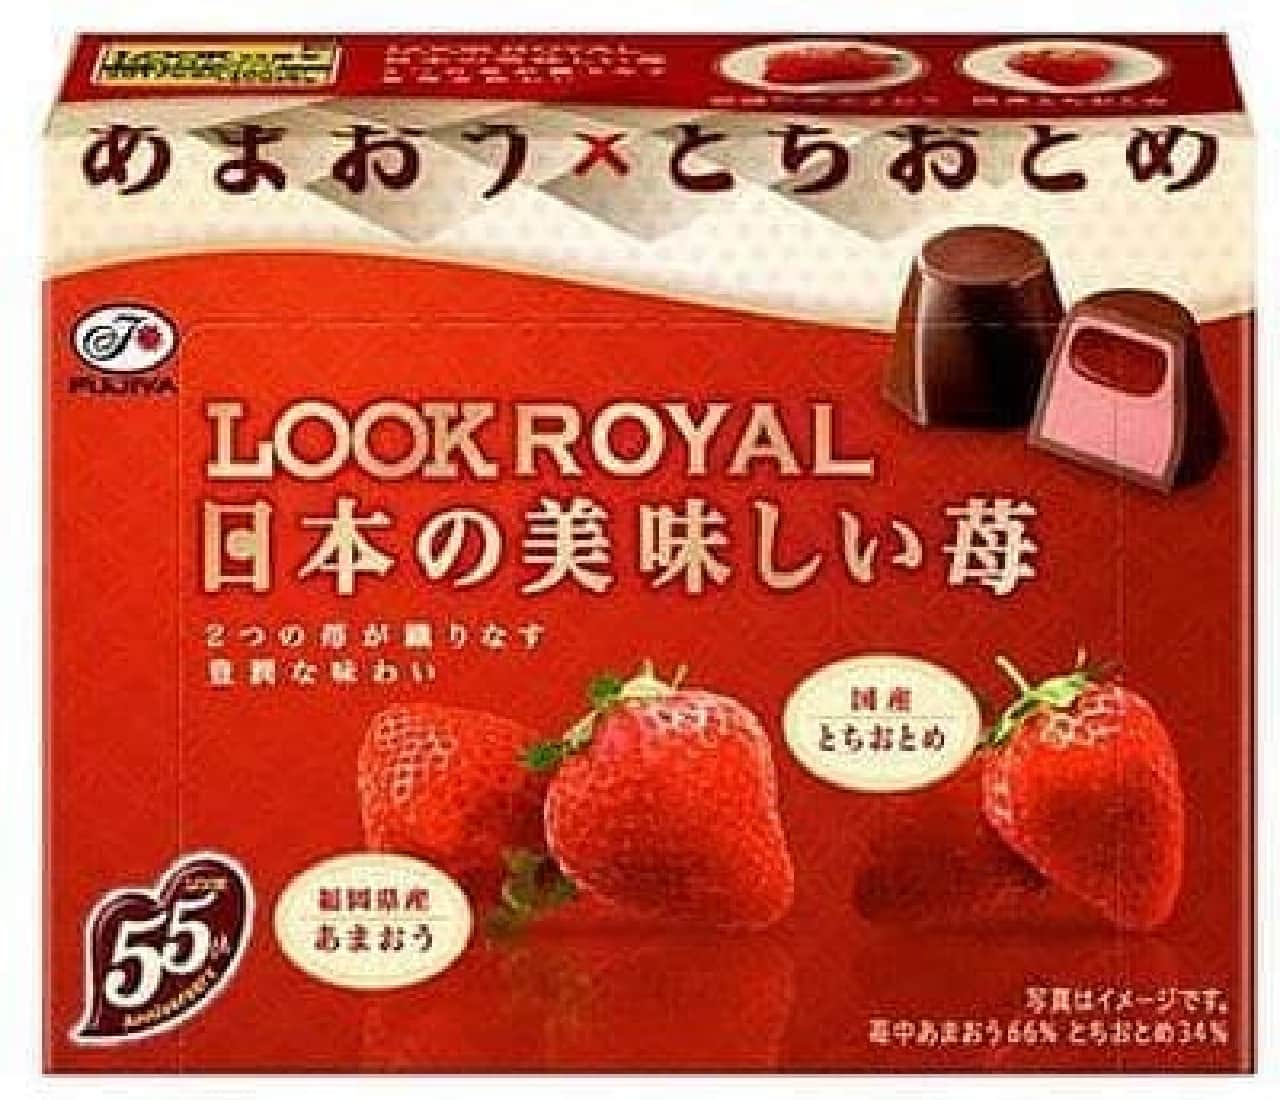 Fujiya "Look Royal (delicious Japanese strawberries)"